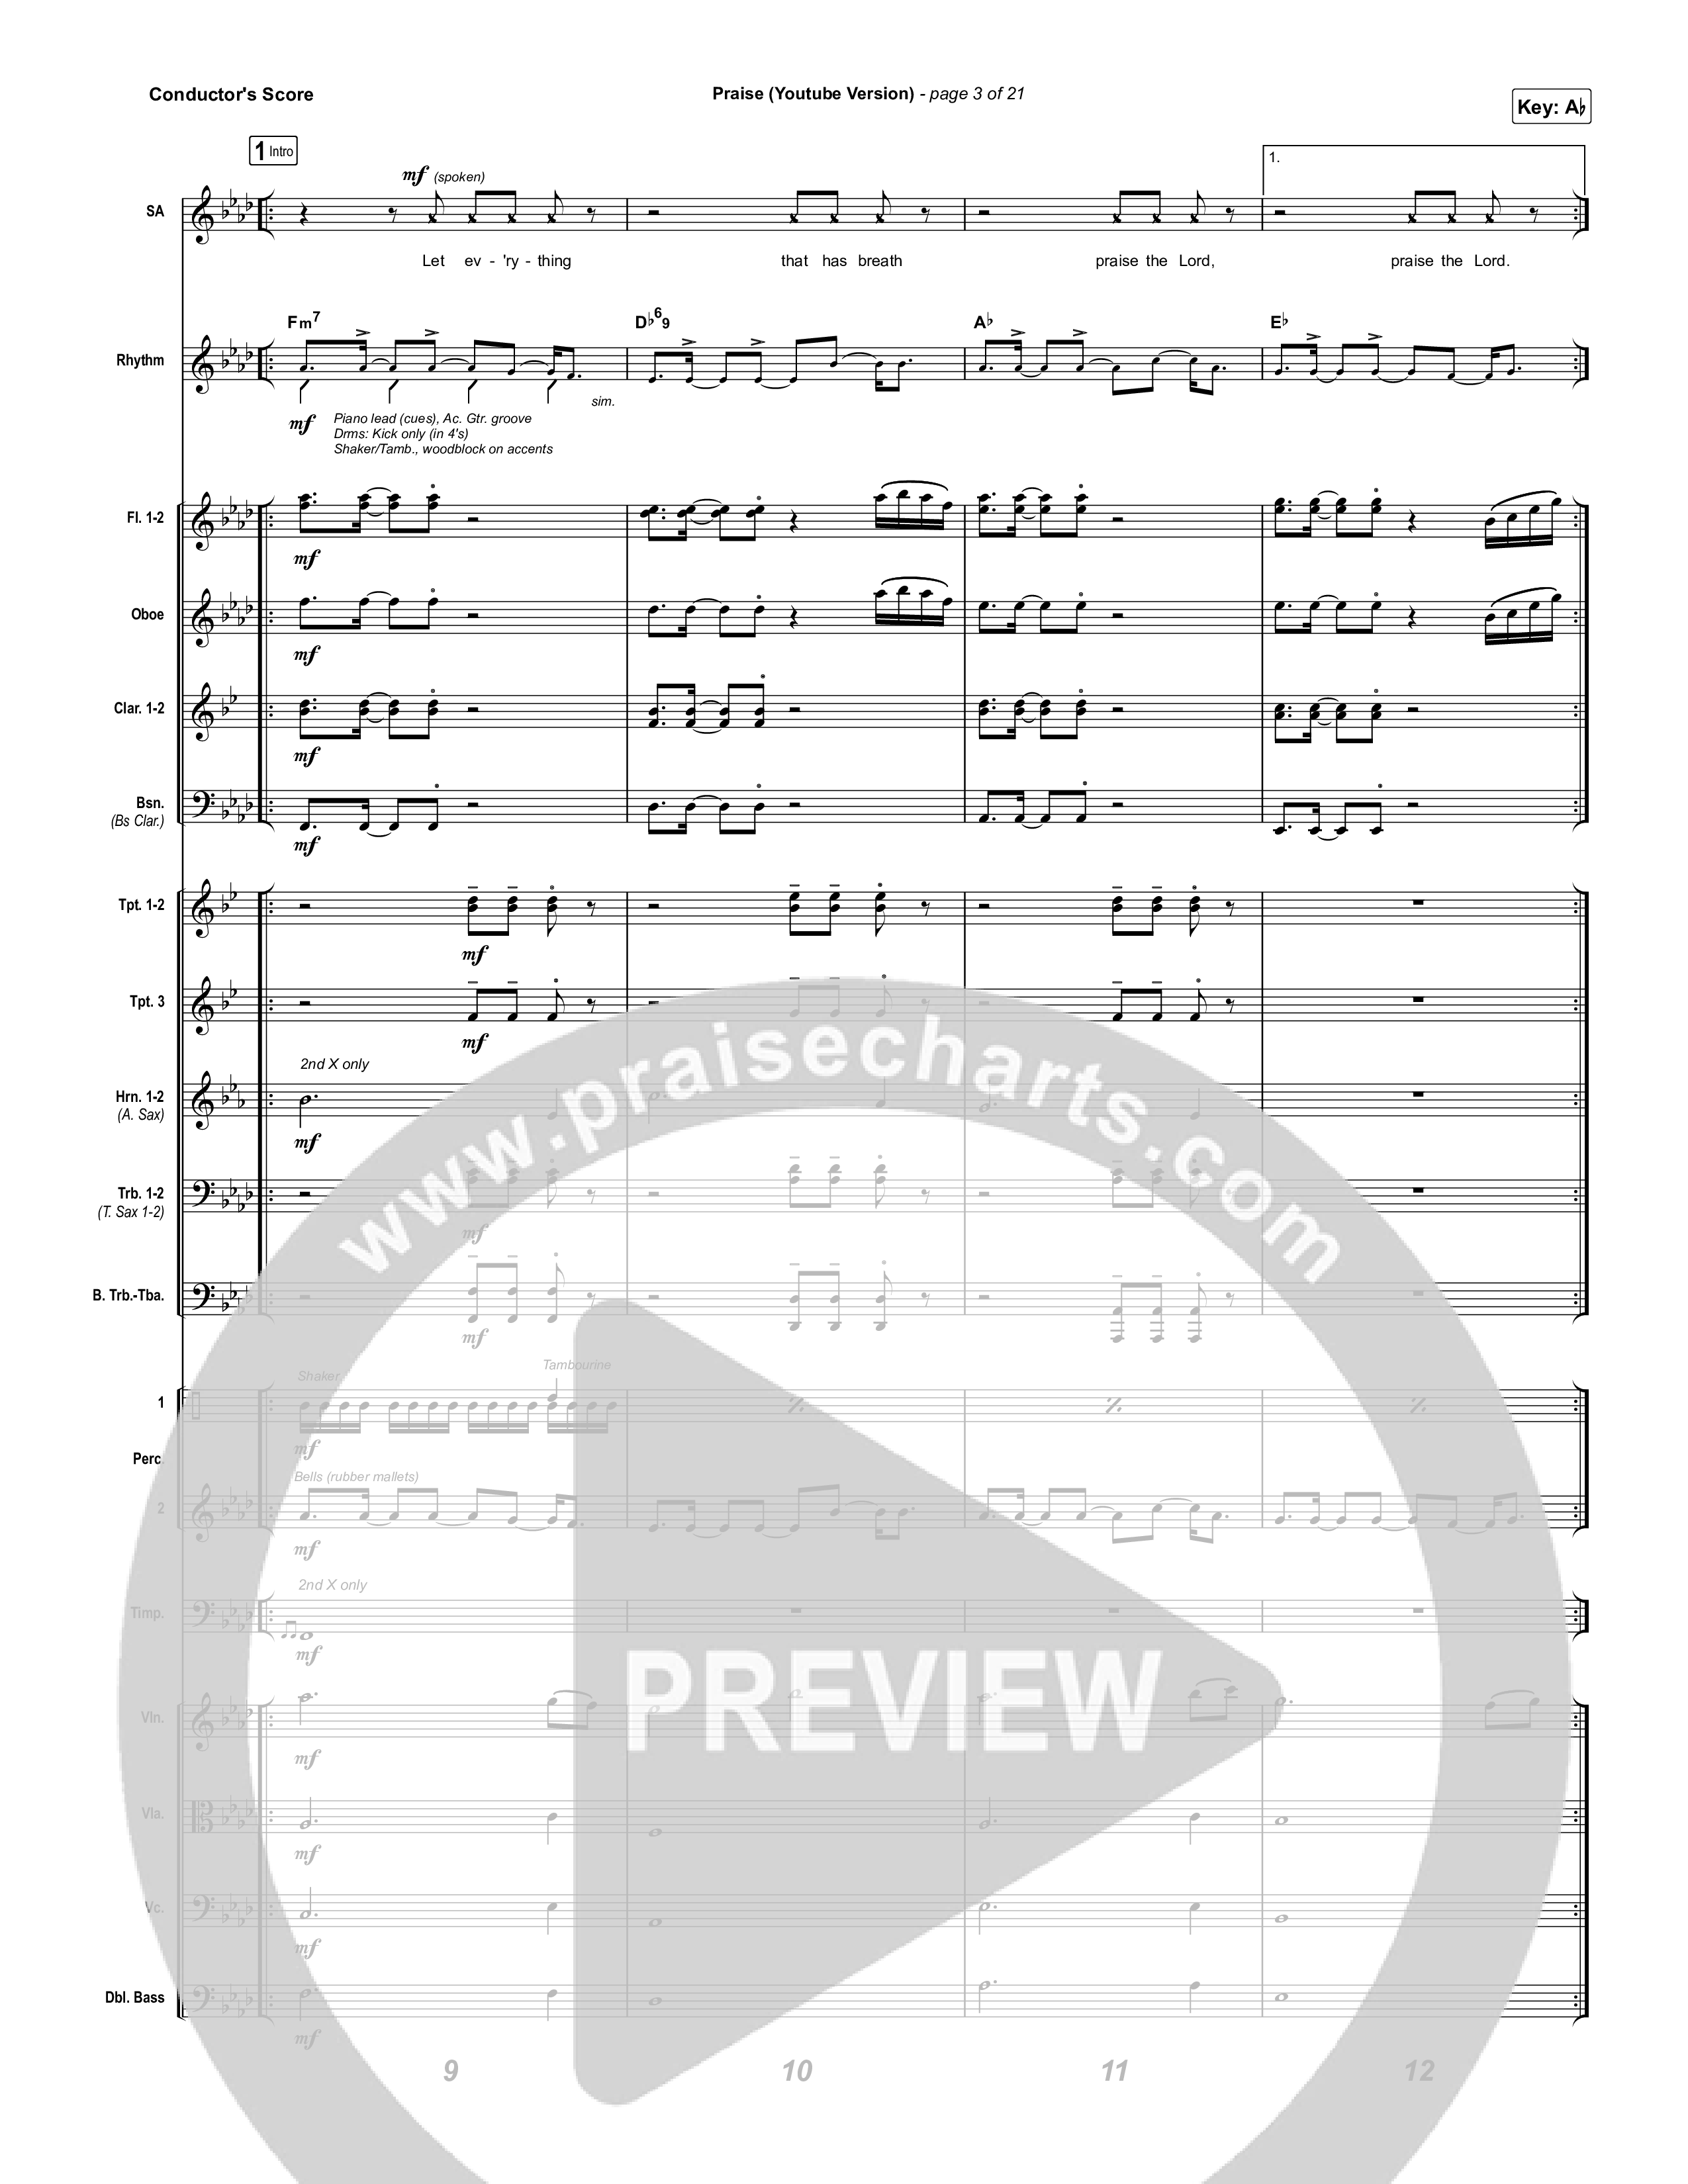 Praise Conductor's Score (Elevation Worship / Elevation Choir)